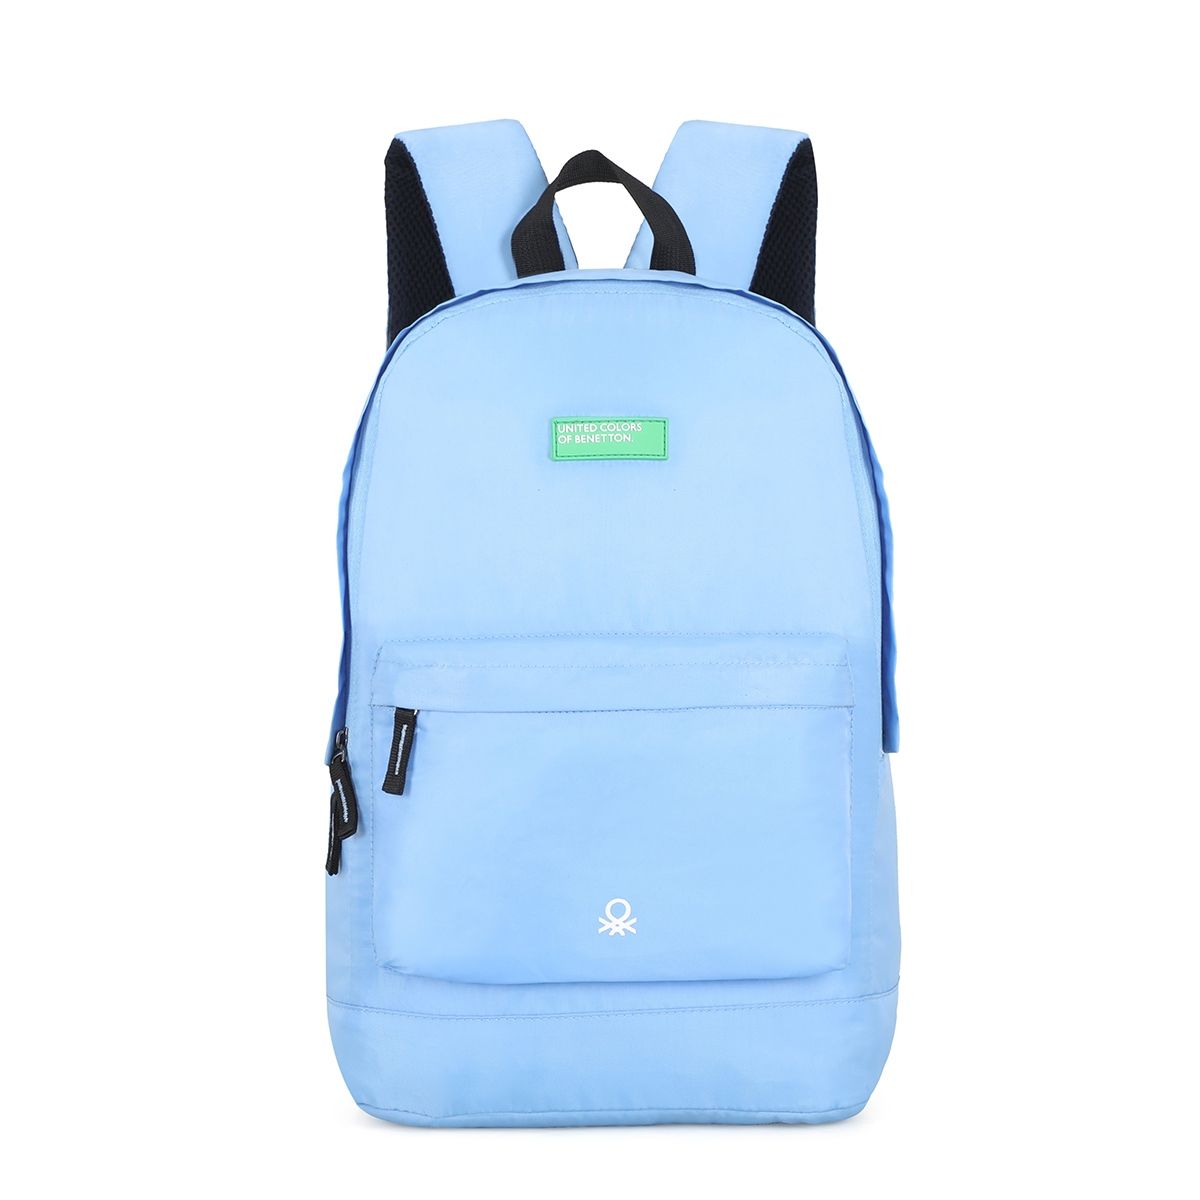 Kate Spade Blue Backpack | Kate spade leather backpack, Blue leather  backpack, Kate spade backpack purse